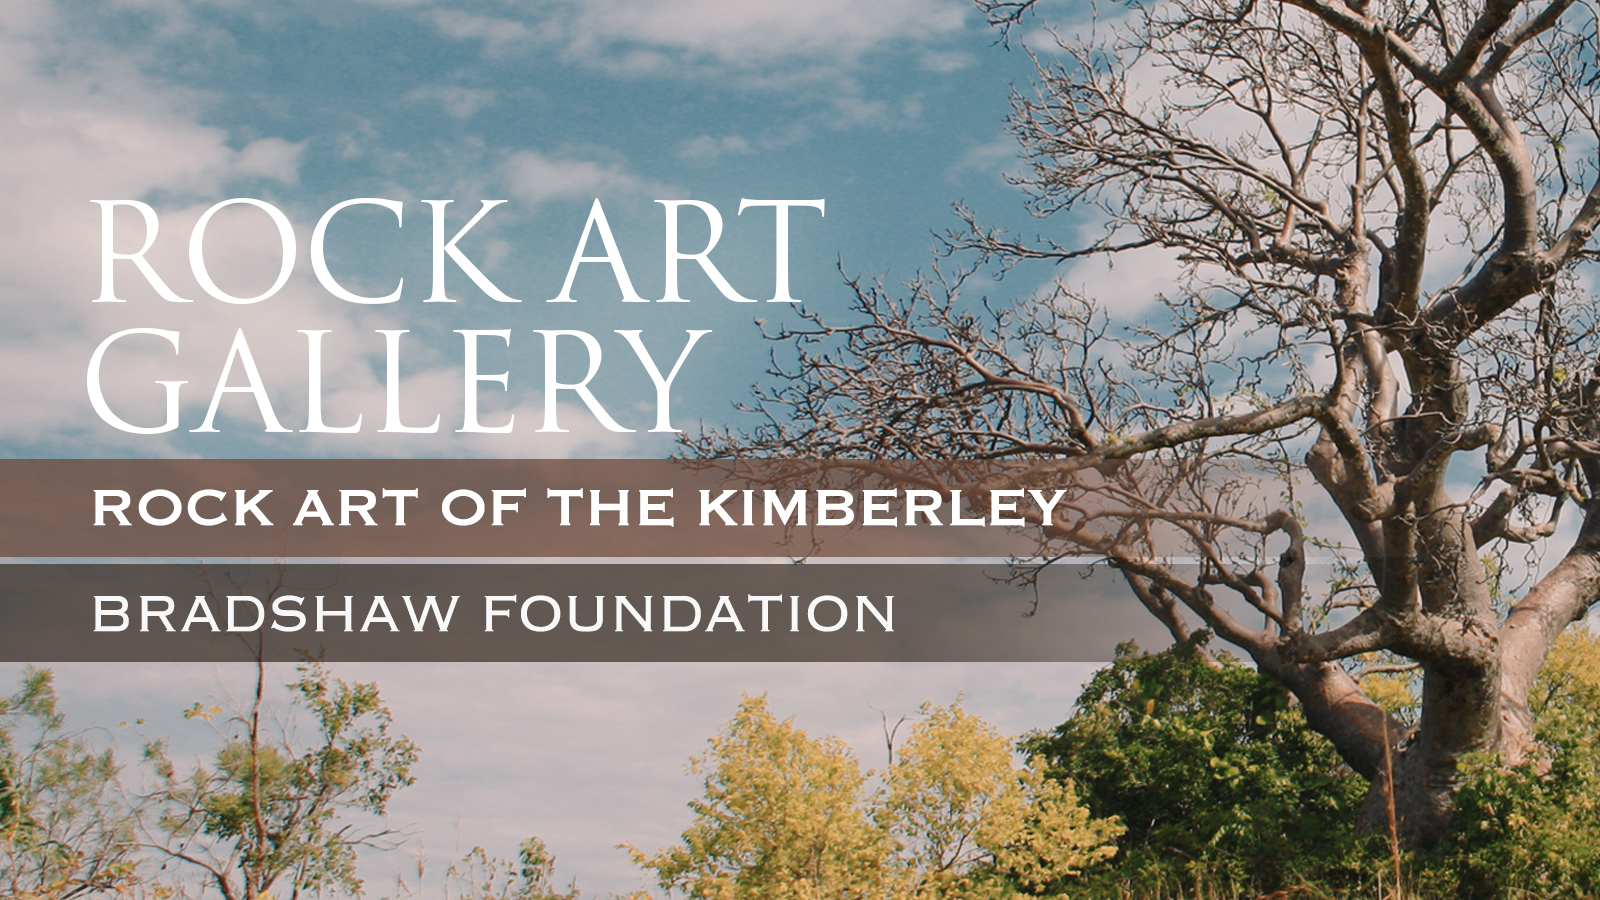 The Rock Art of the Kimberley